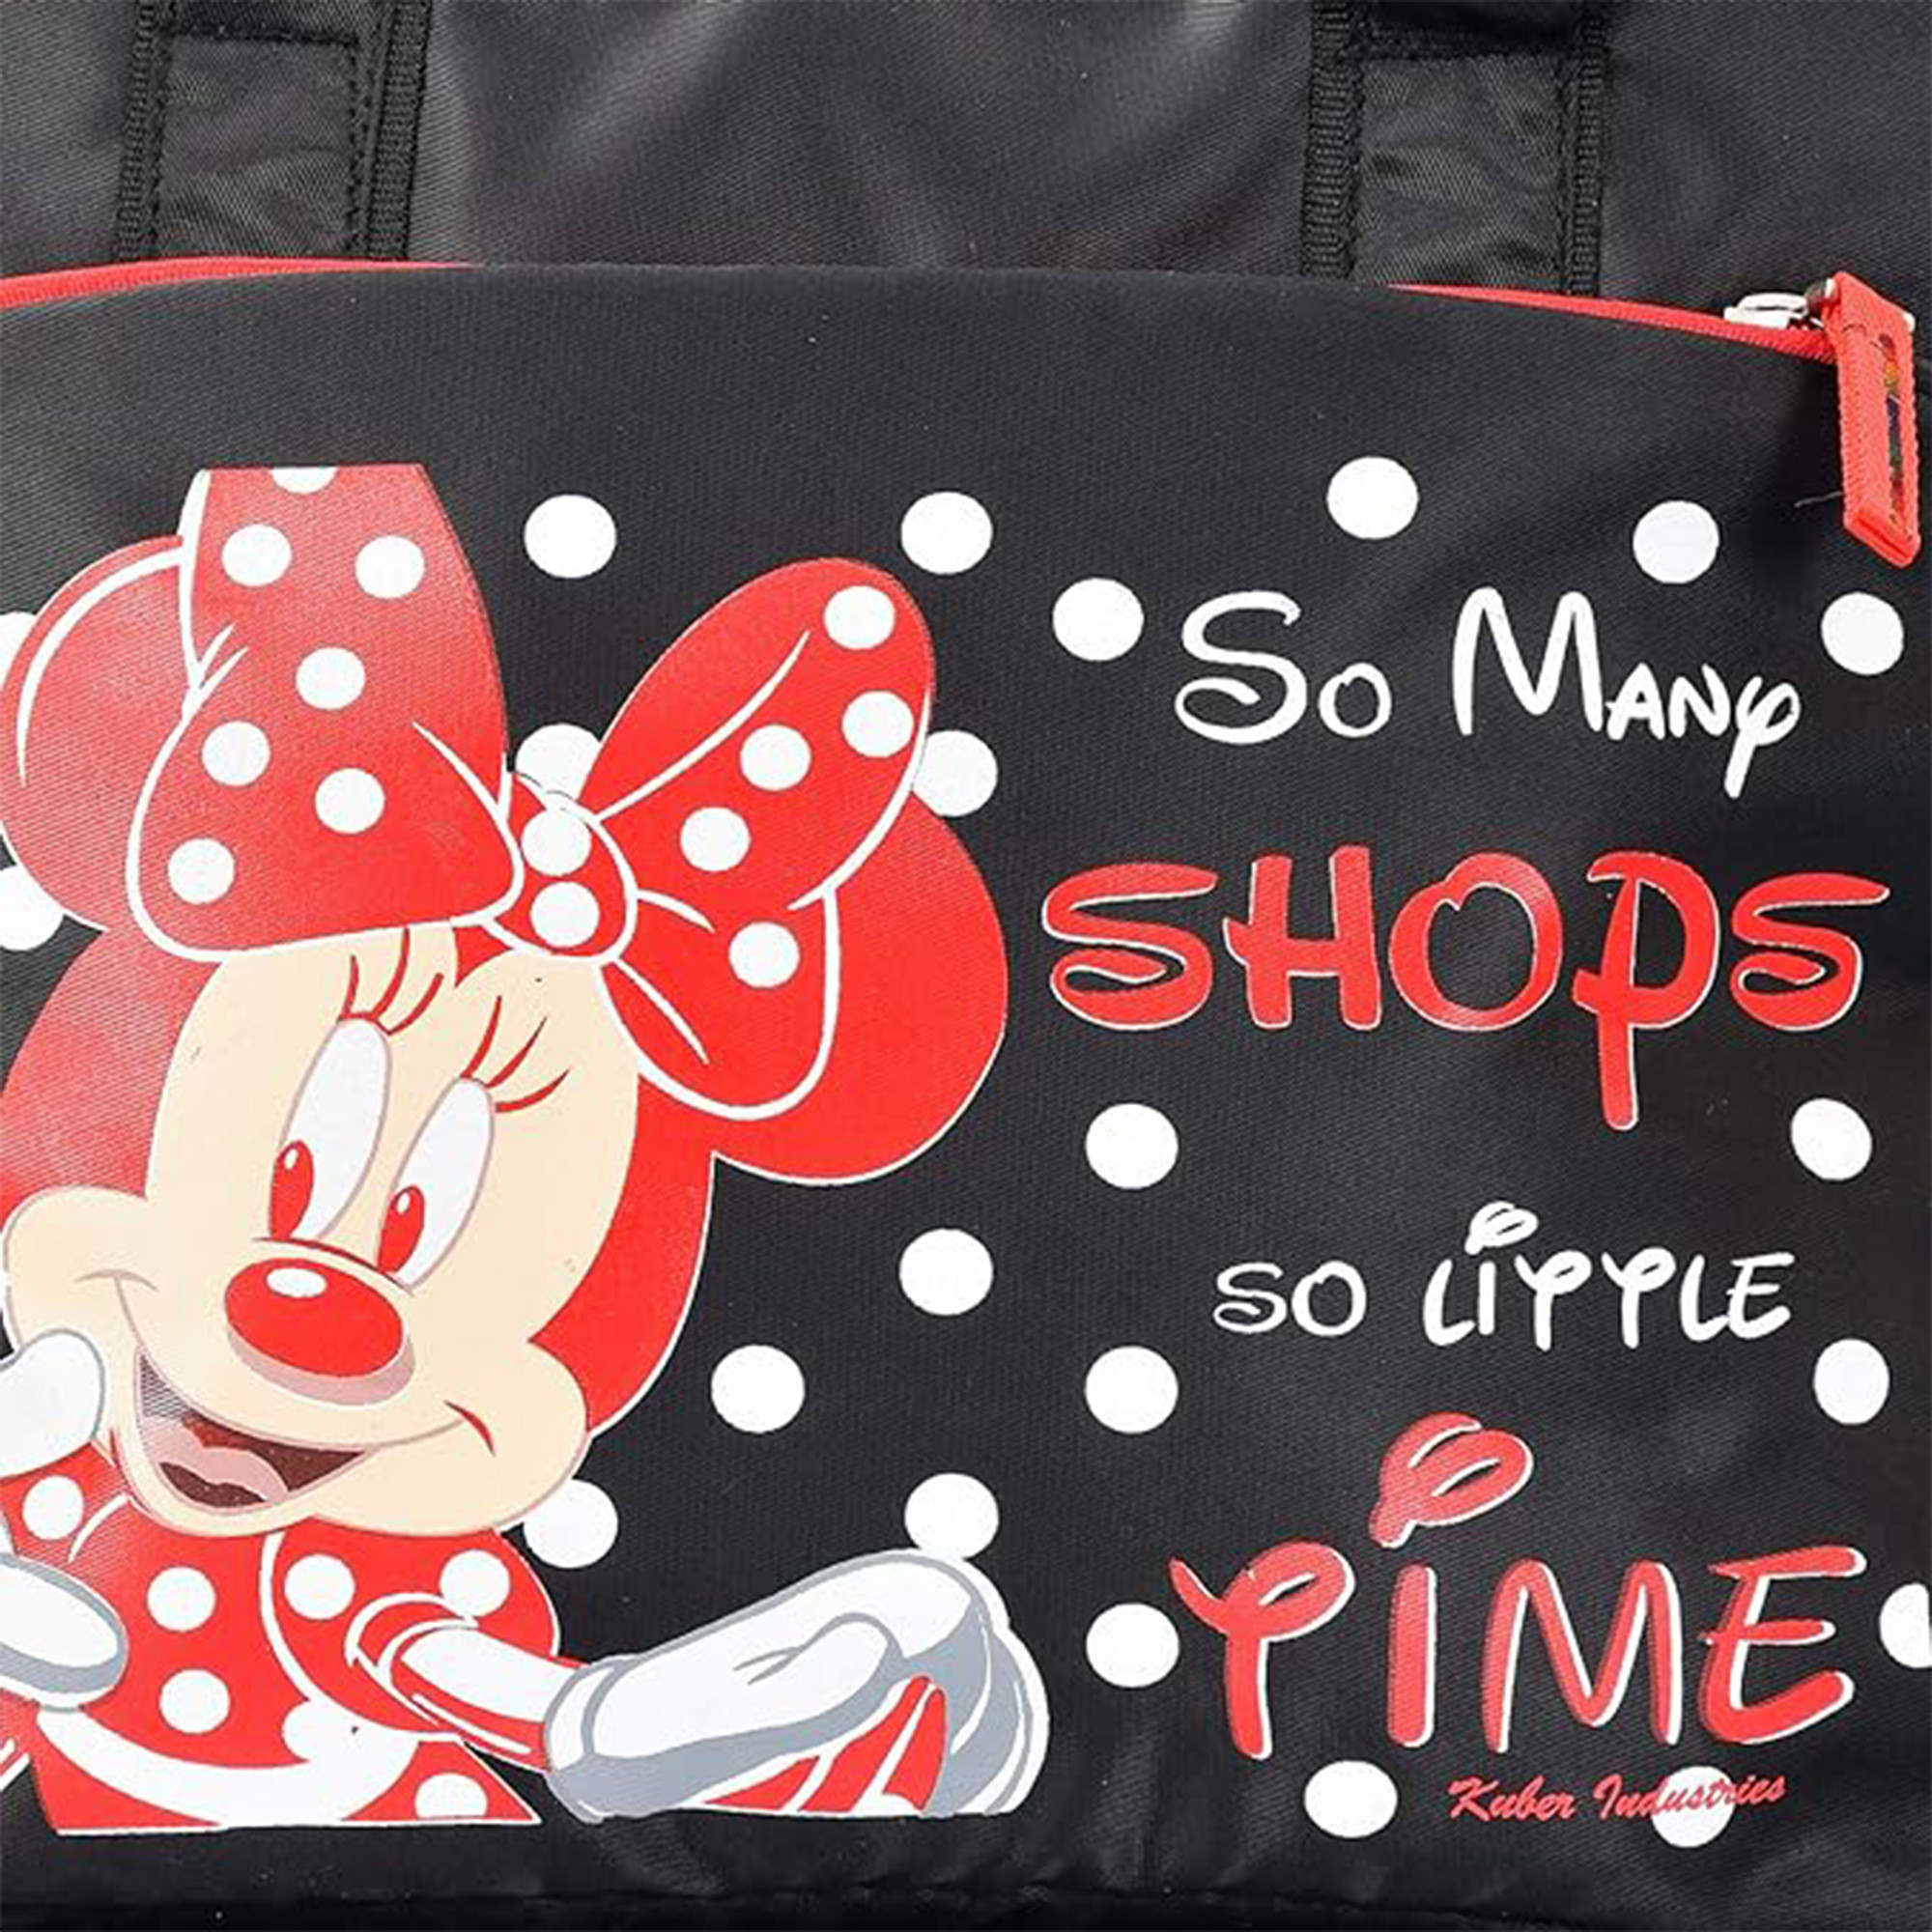 Kuber Industries Disney Minnie Shopping Bag | Grocery Handbag | 5 Zipper & 1 Bottle Compartment | Shoulder Bag with Adjustable Strap with Handle| Black